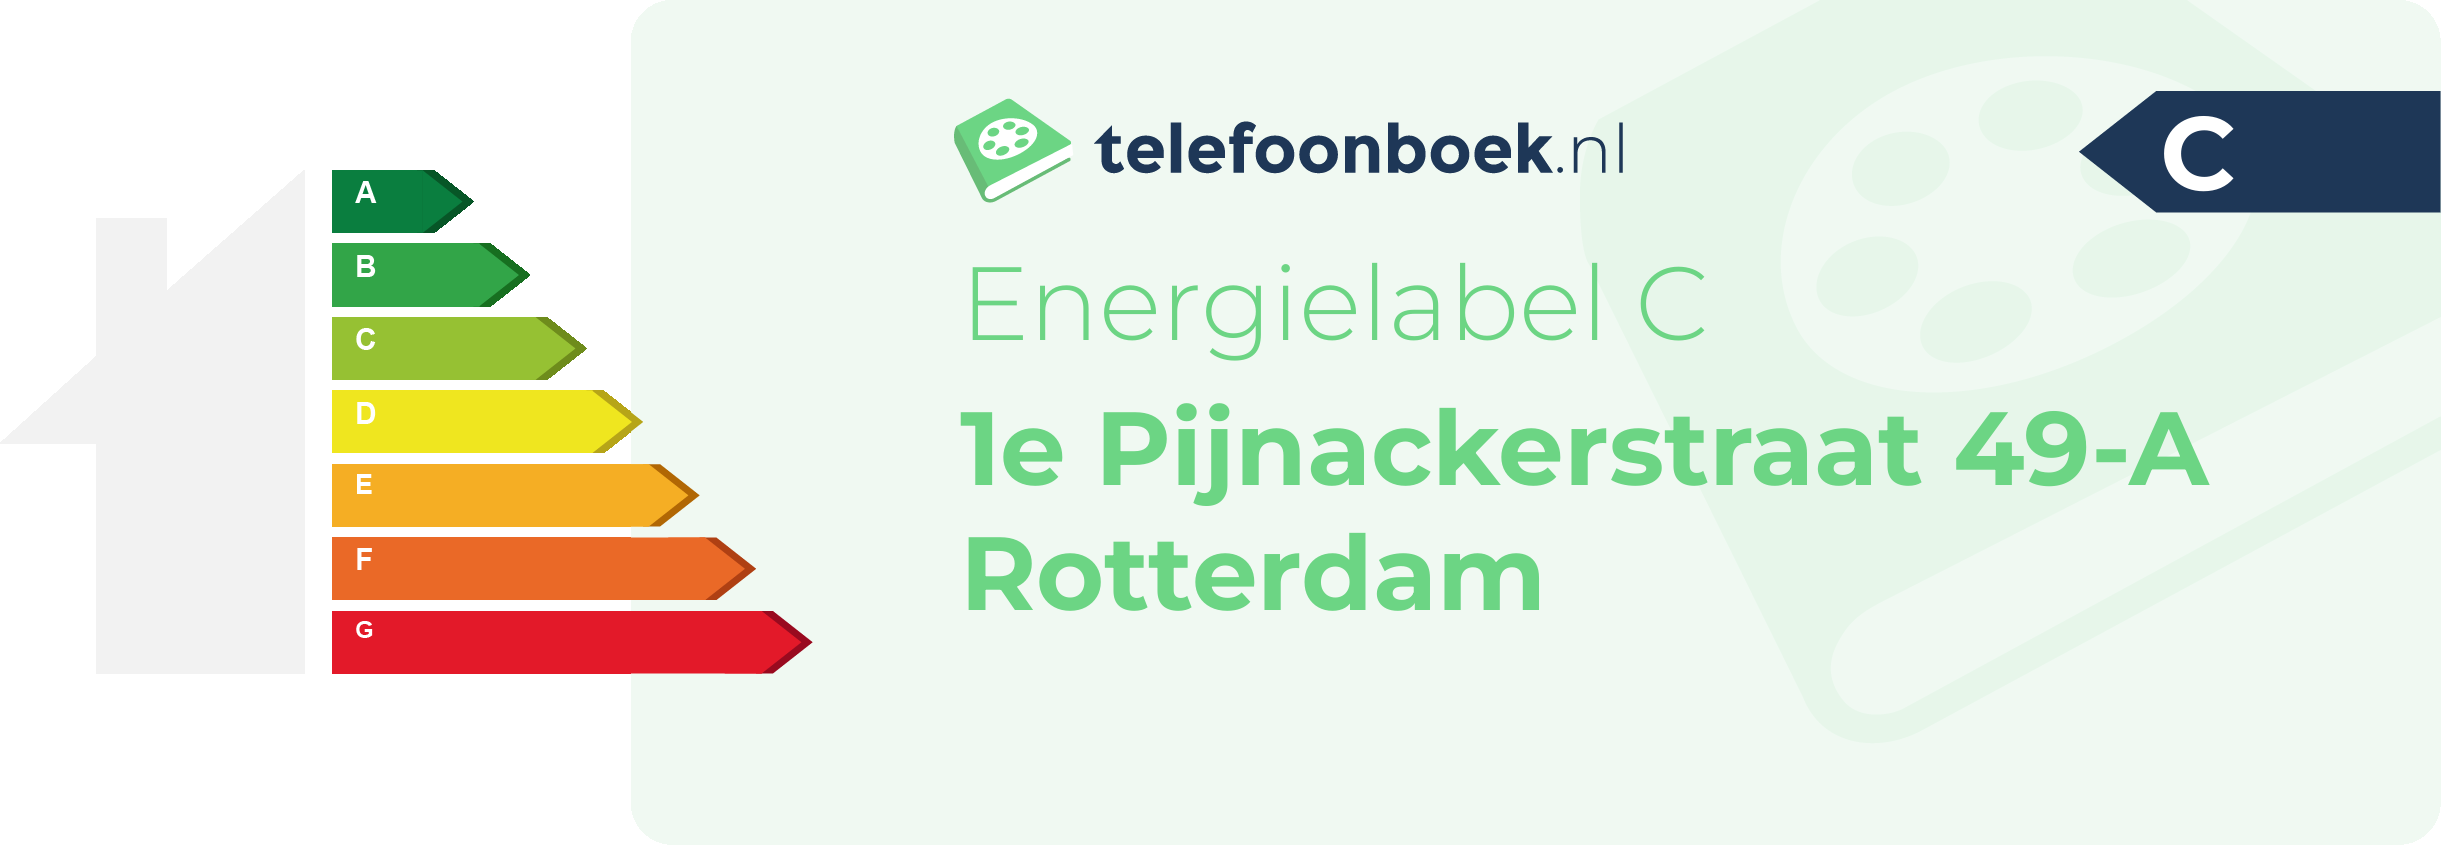 Energielabel 1e Pijnackerstraat 49-A Rotterdam